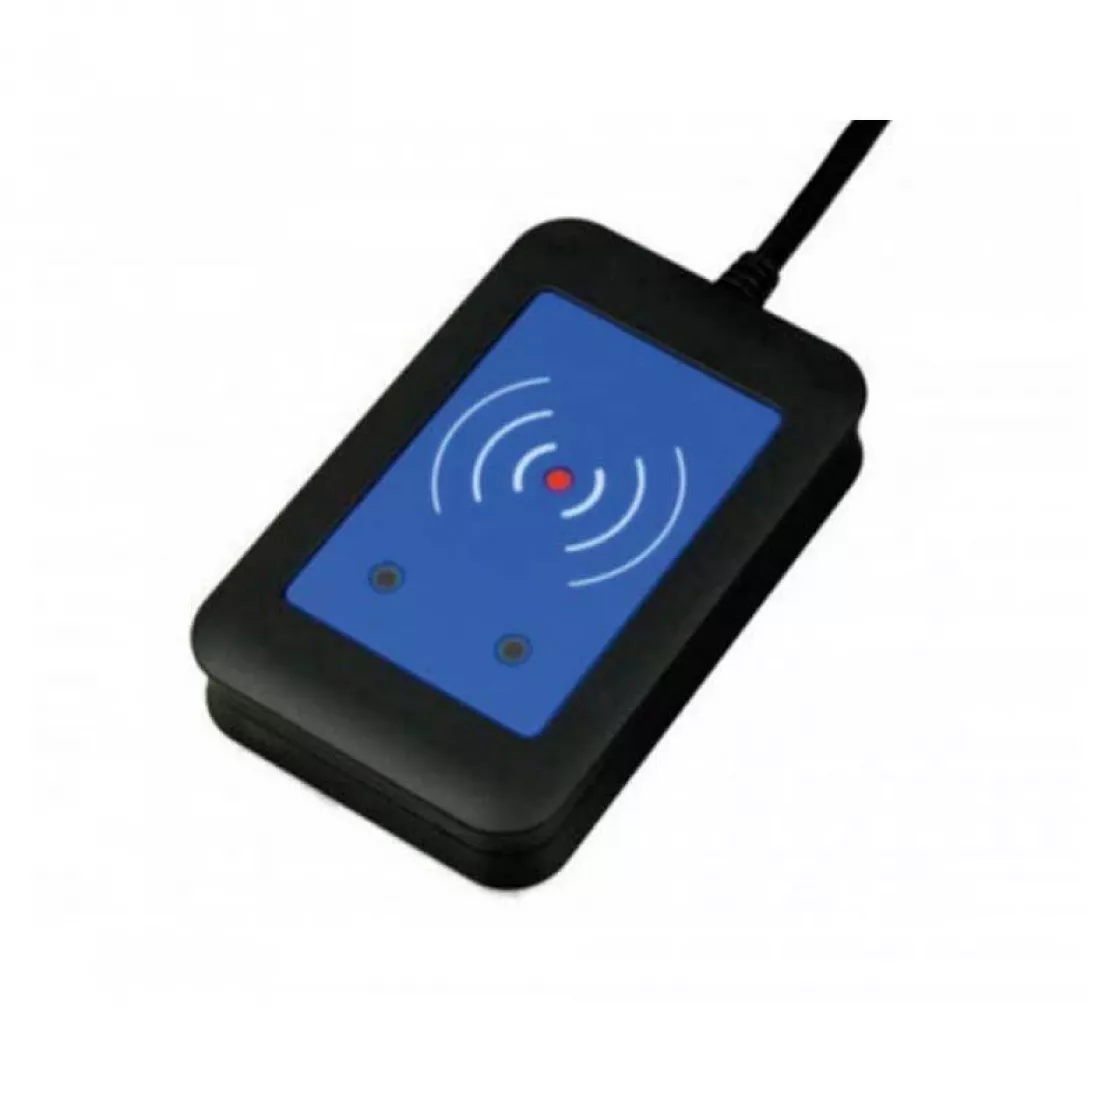 Elatec TWN3 Legic NFC RFID Reader